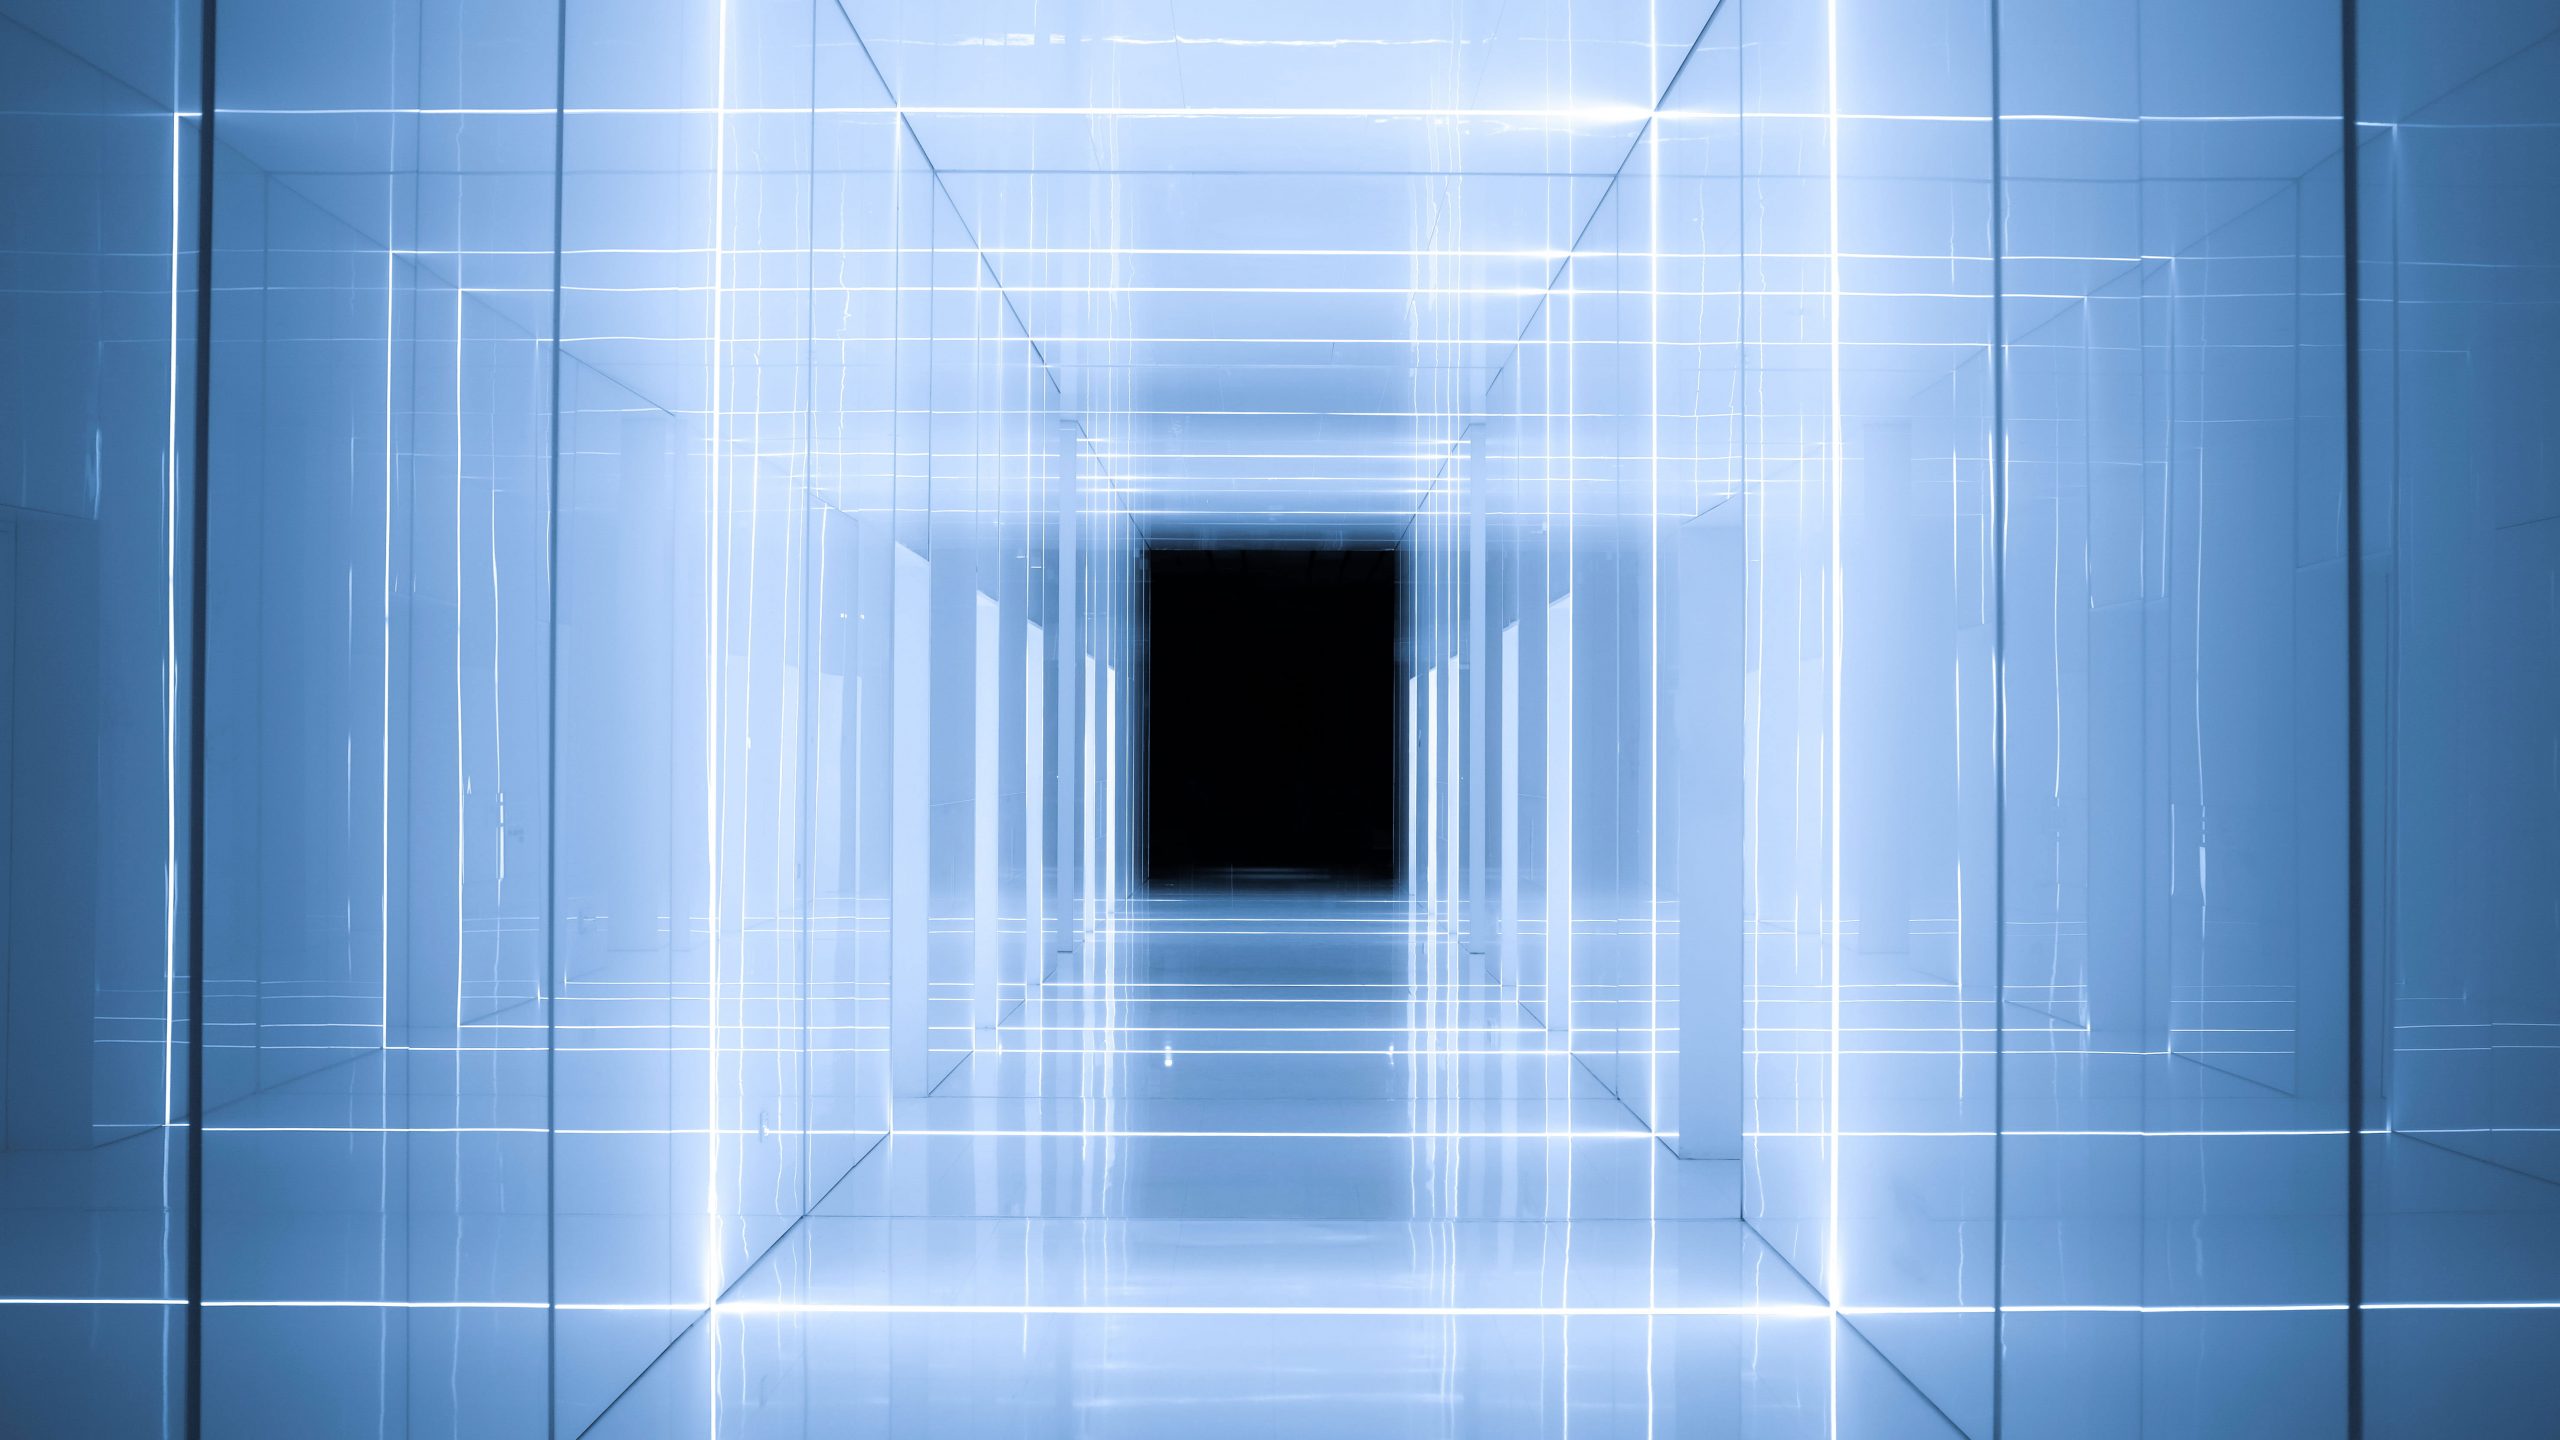 Mirrored pathway wallpaper, infinity mirror, hallway, blue neon, neon light